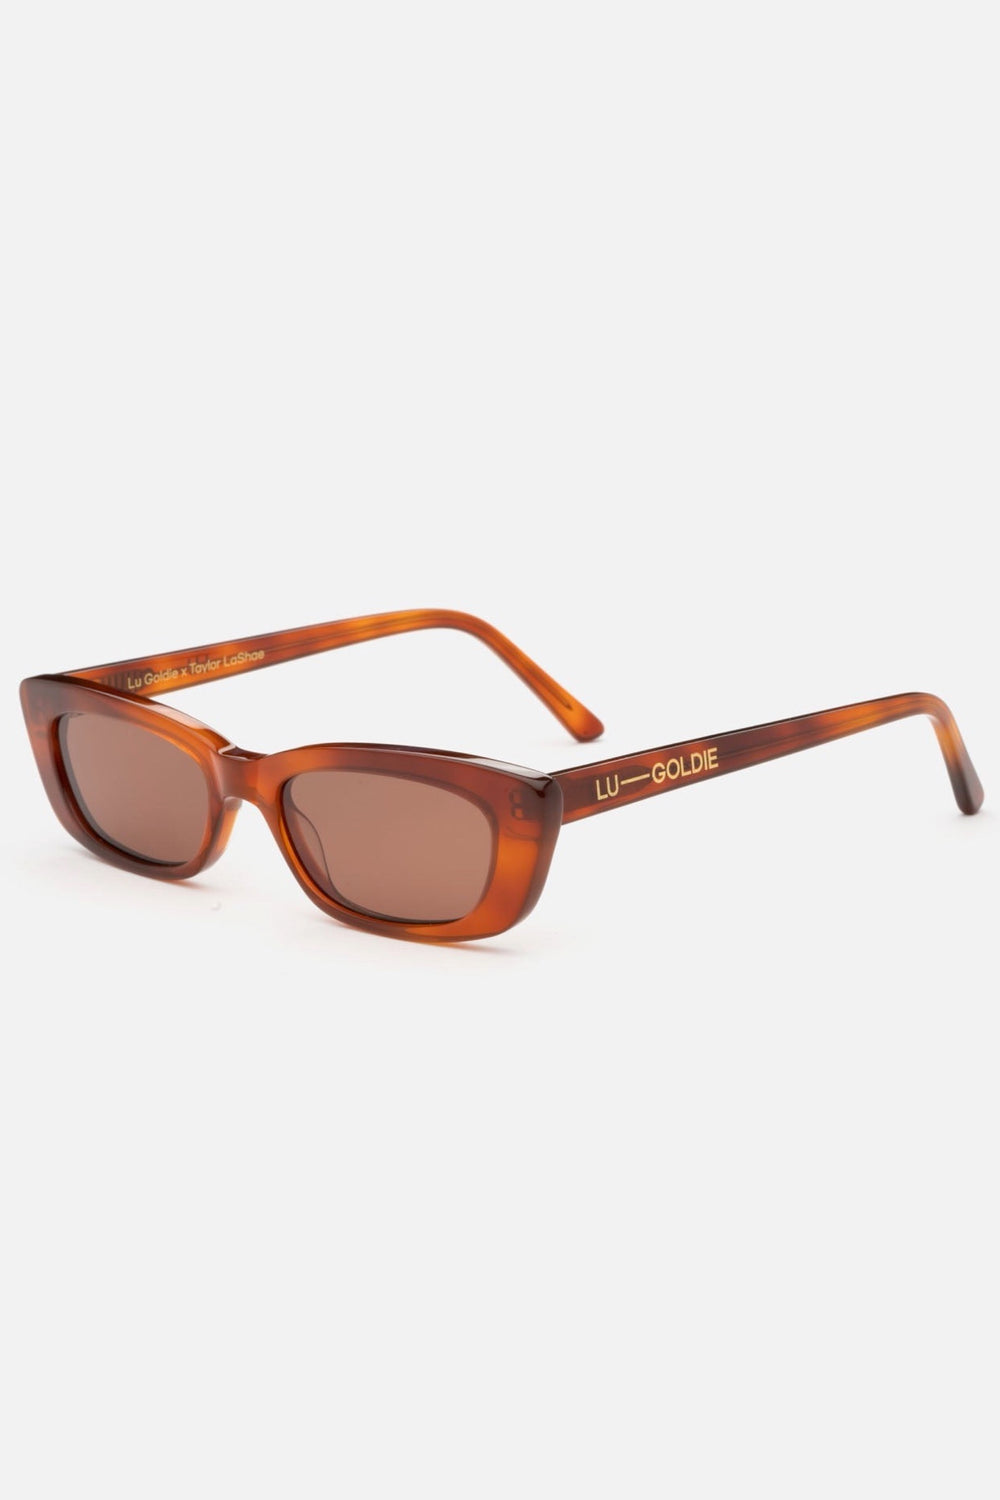 Chestnut TL04 Sunglasses